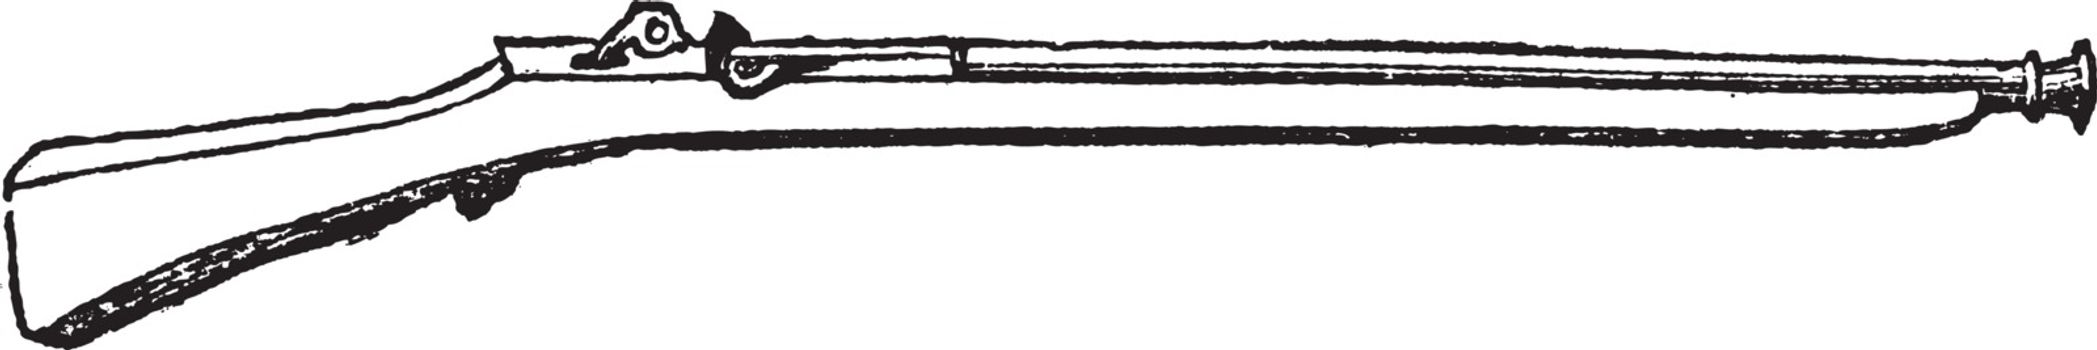 Arquebus ancient firearm old engraving